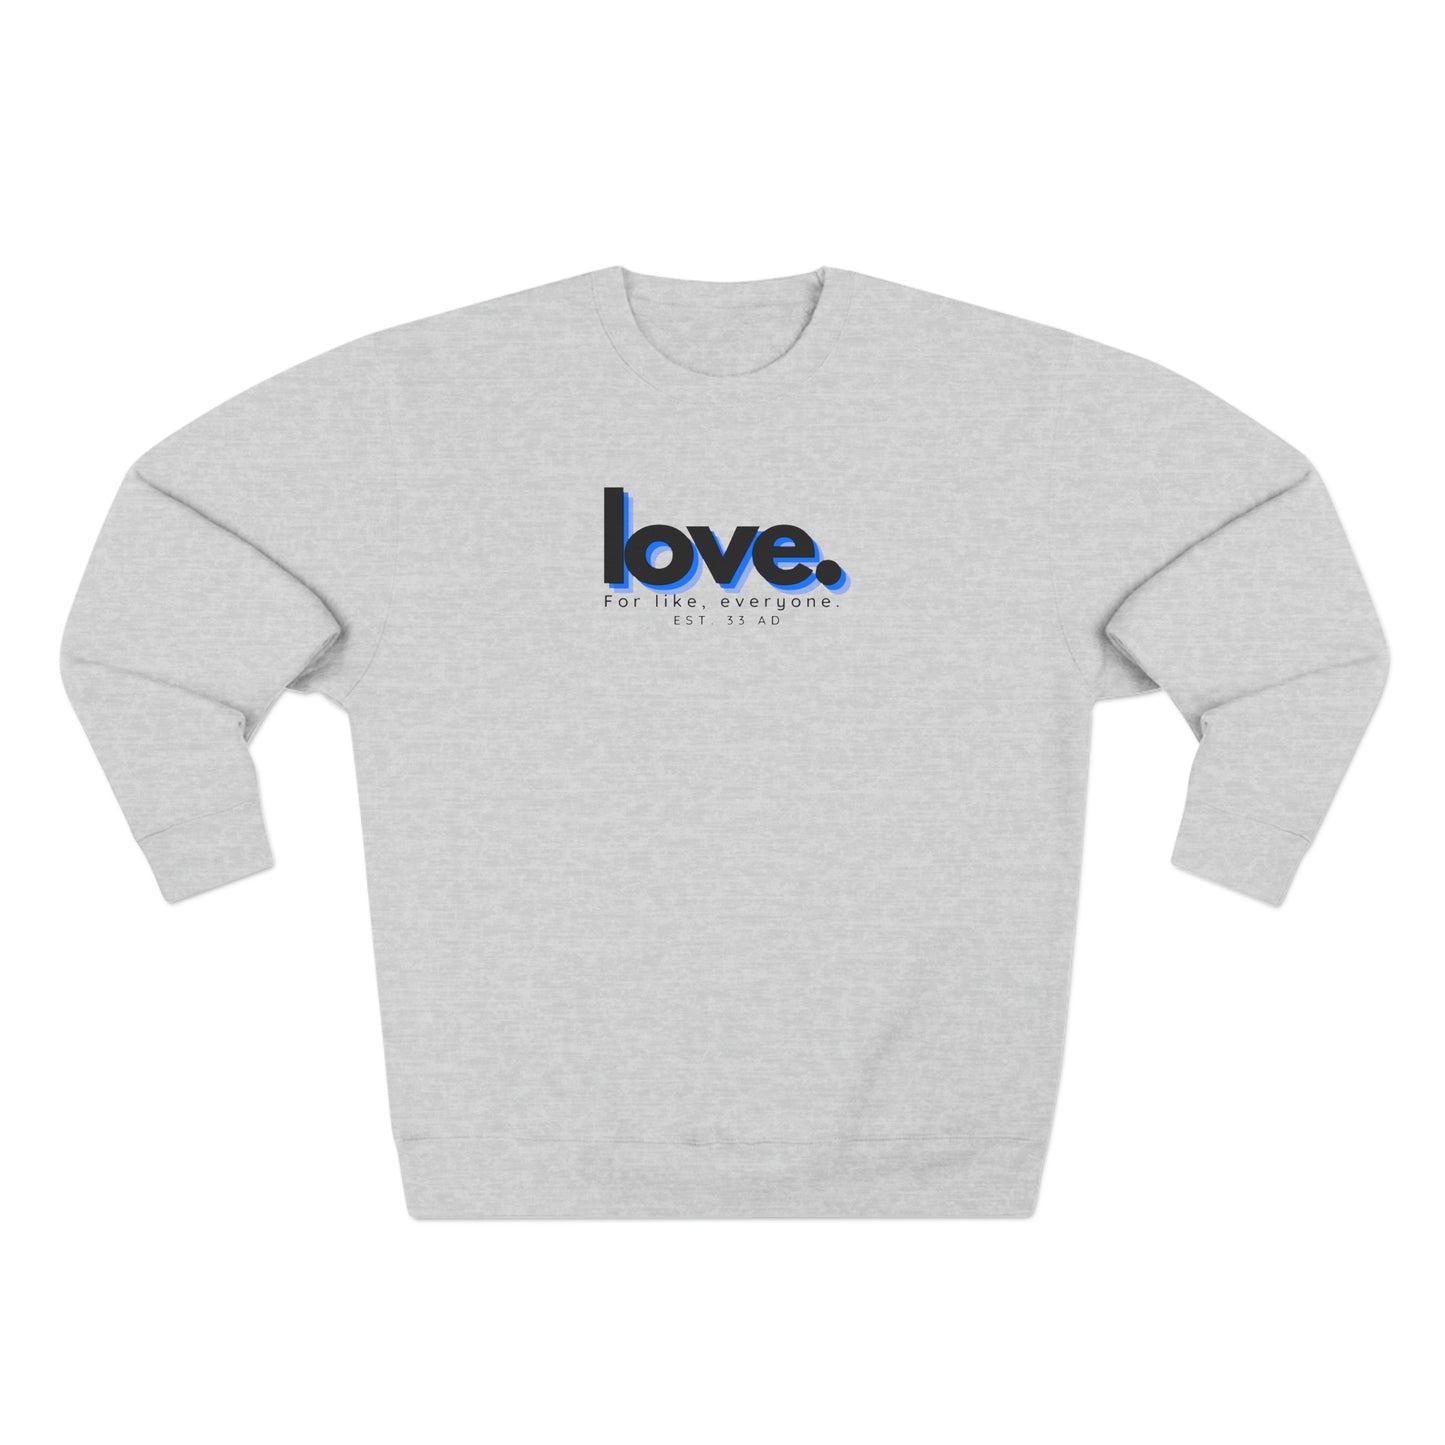 Love, Blue Echo, Christian Sweatshirt for Men and Women, Lane Seven